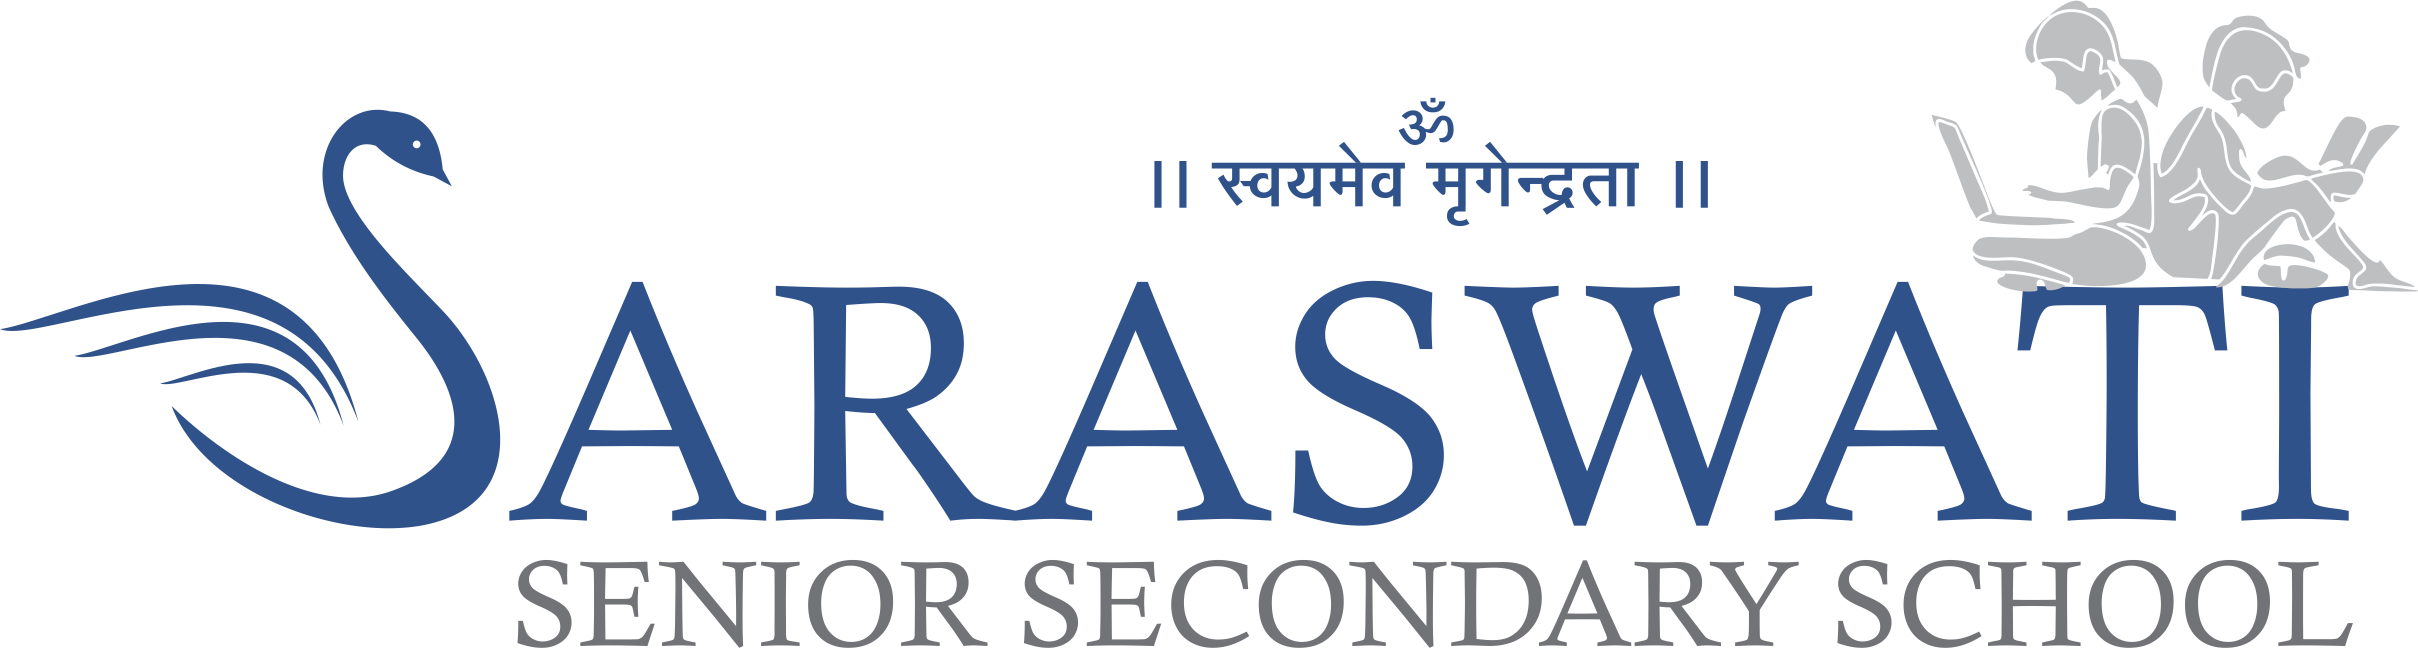 Saraswati Sr. Sec. School Logo